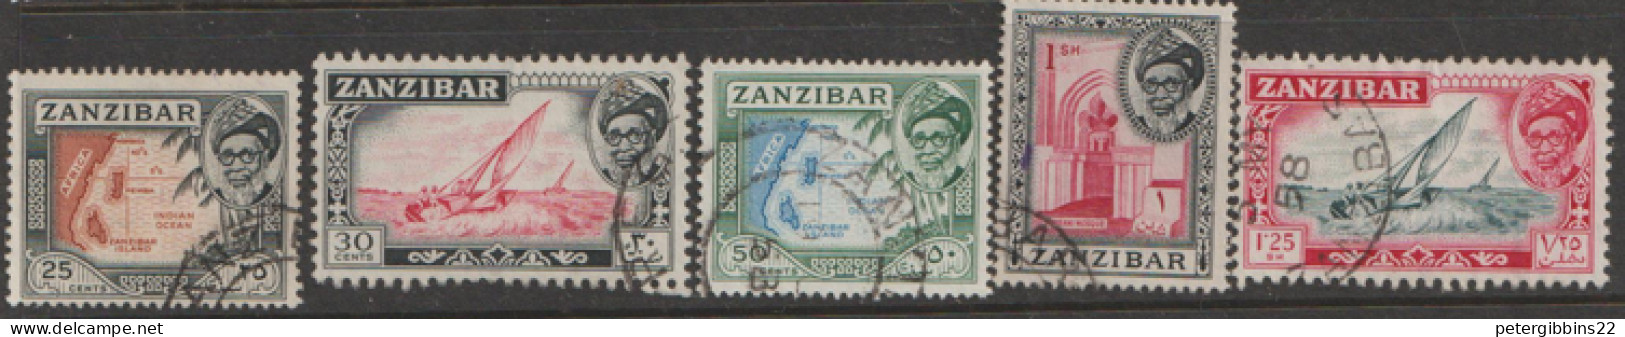 Zanzibar   1957  Various Values Fine Used - Zanzibar (...-1963)